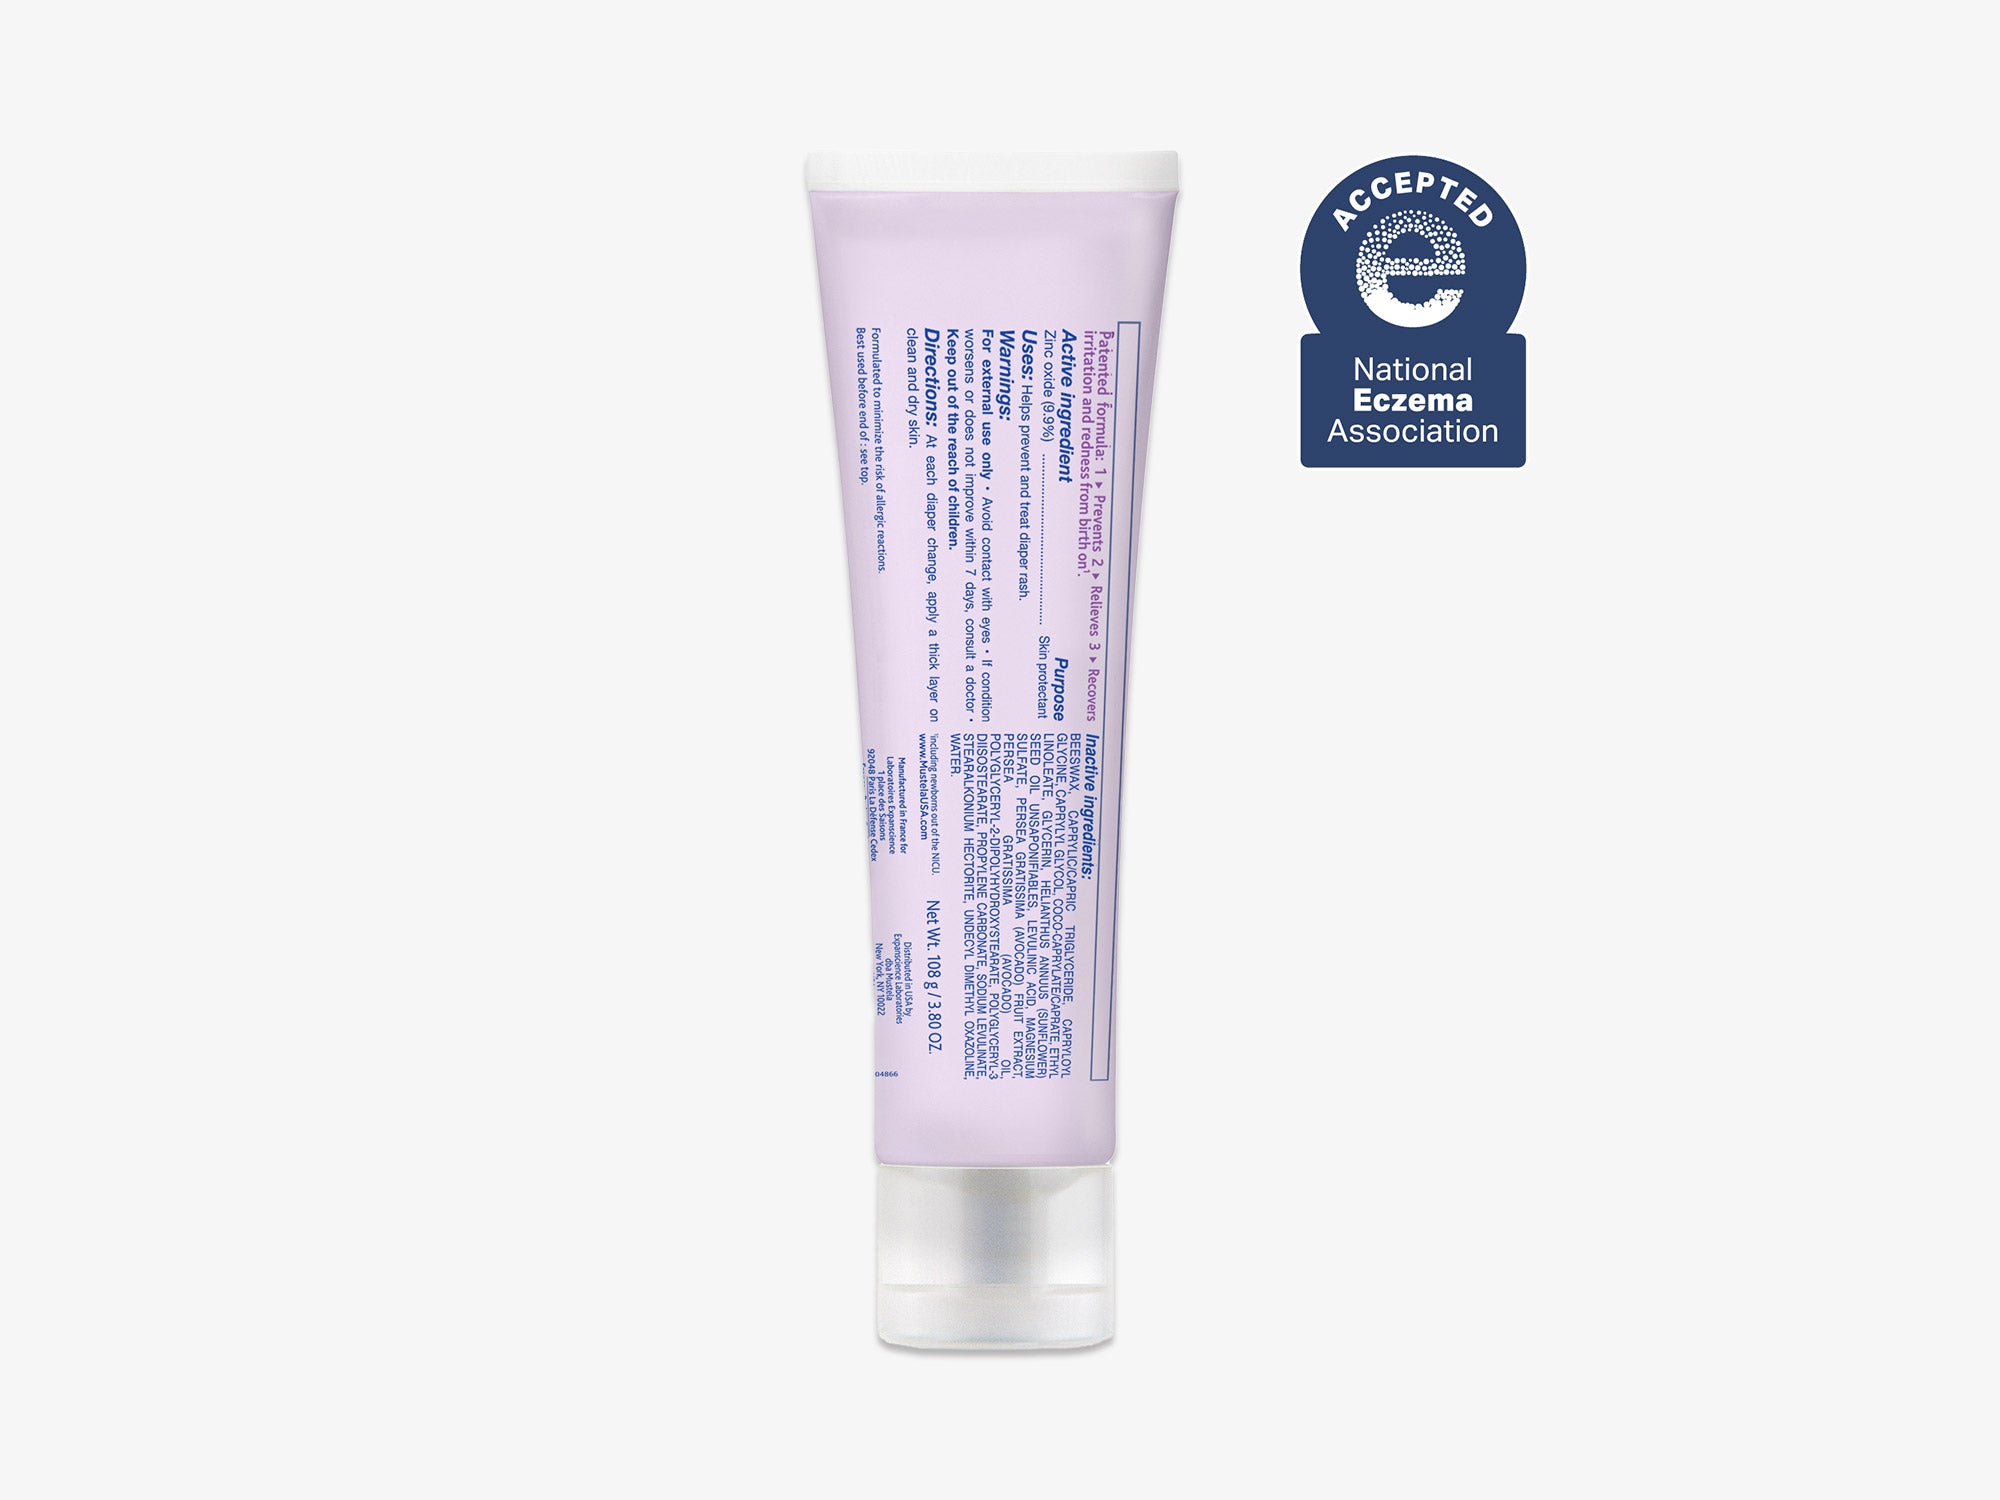 Mustela Famille Diaper Cream - Crema protectora de pañal